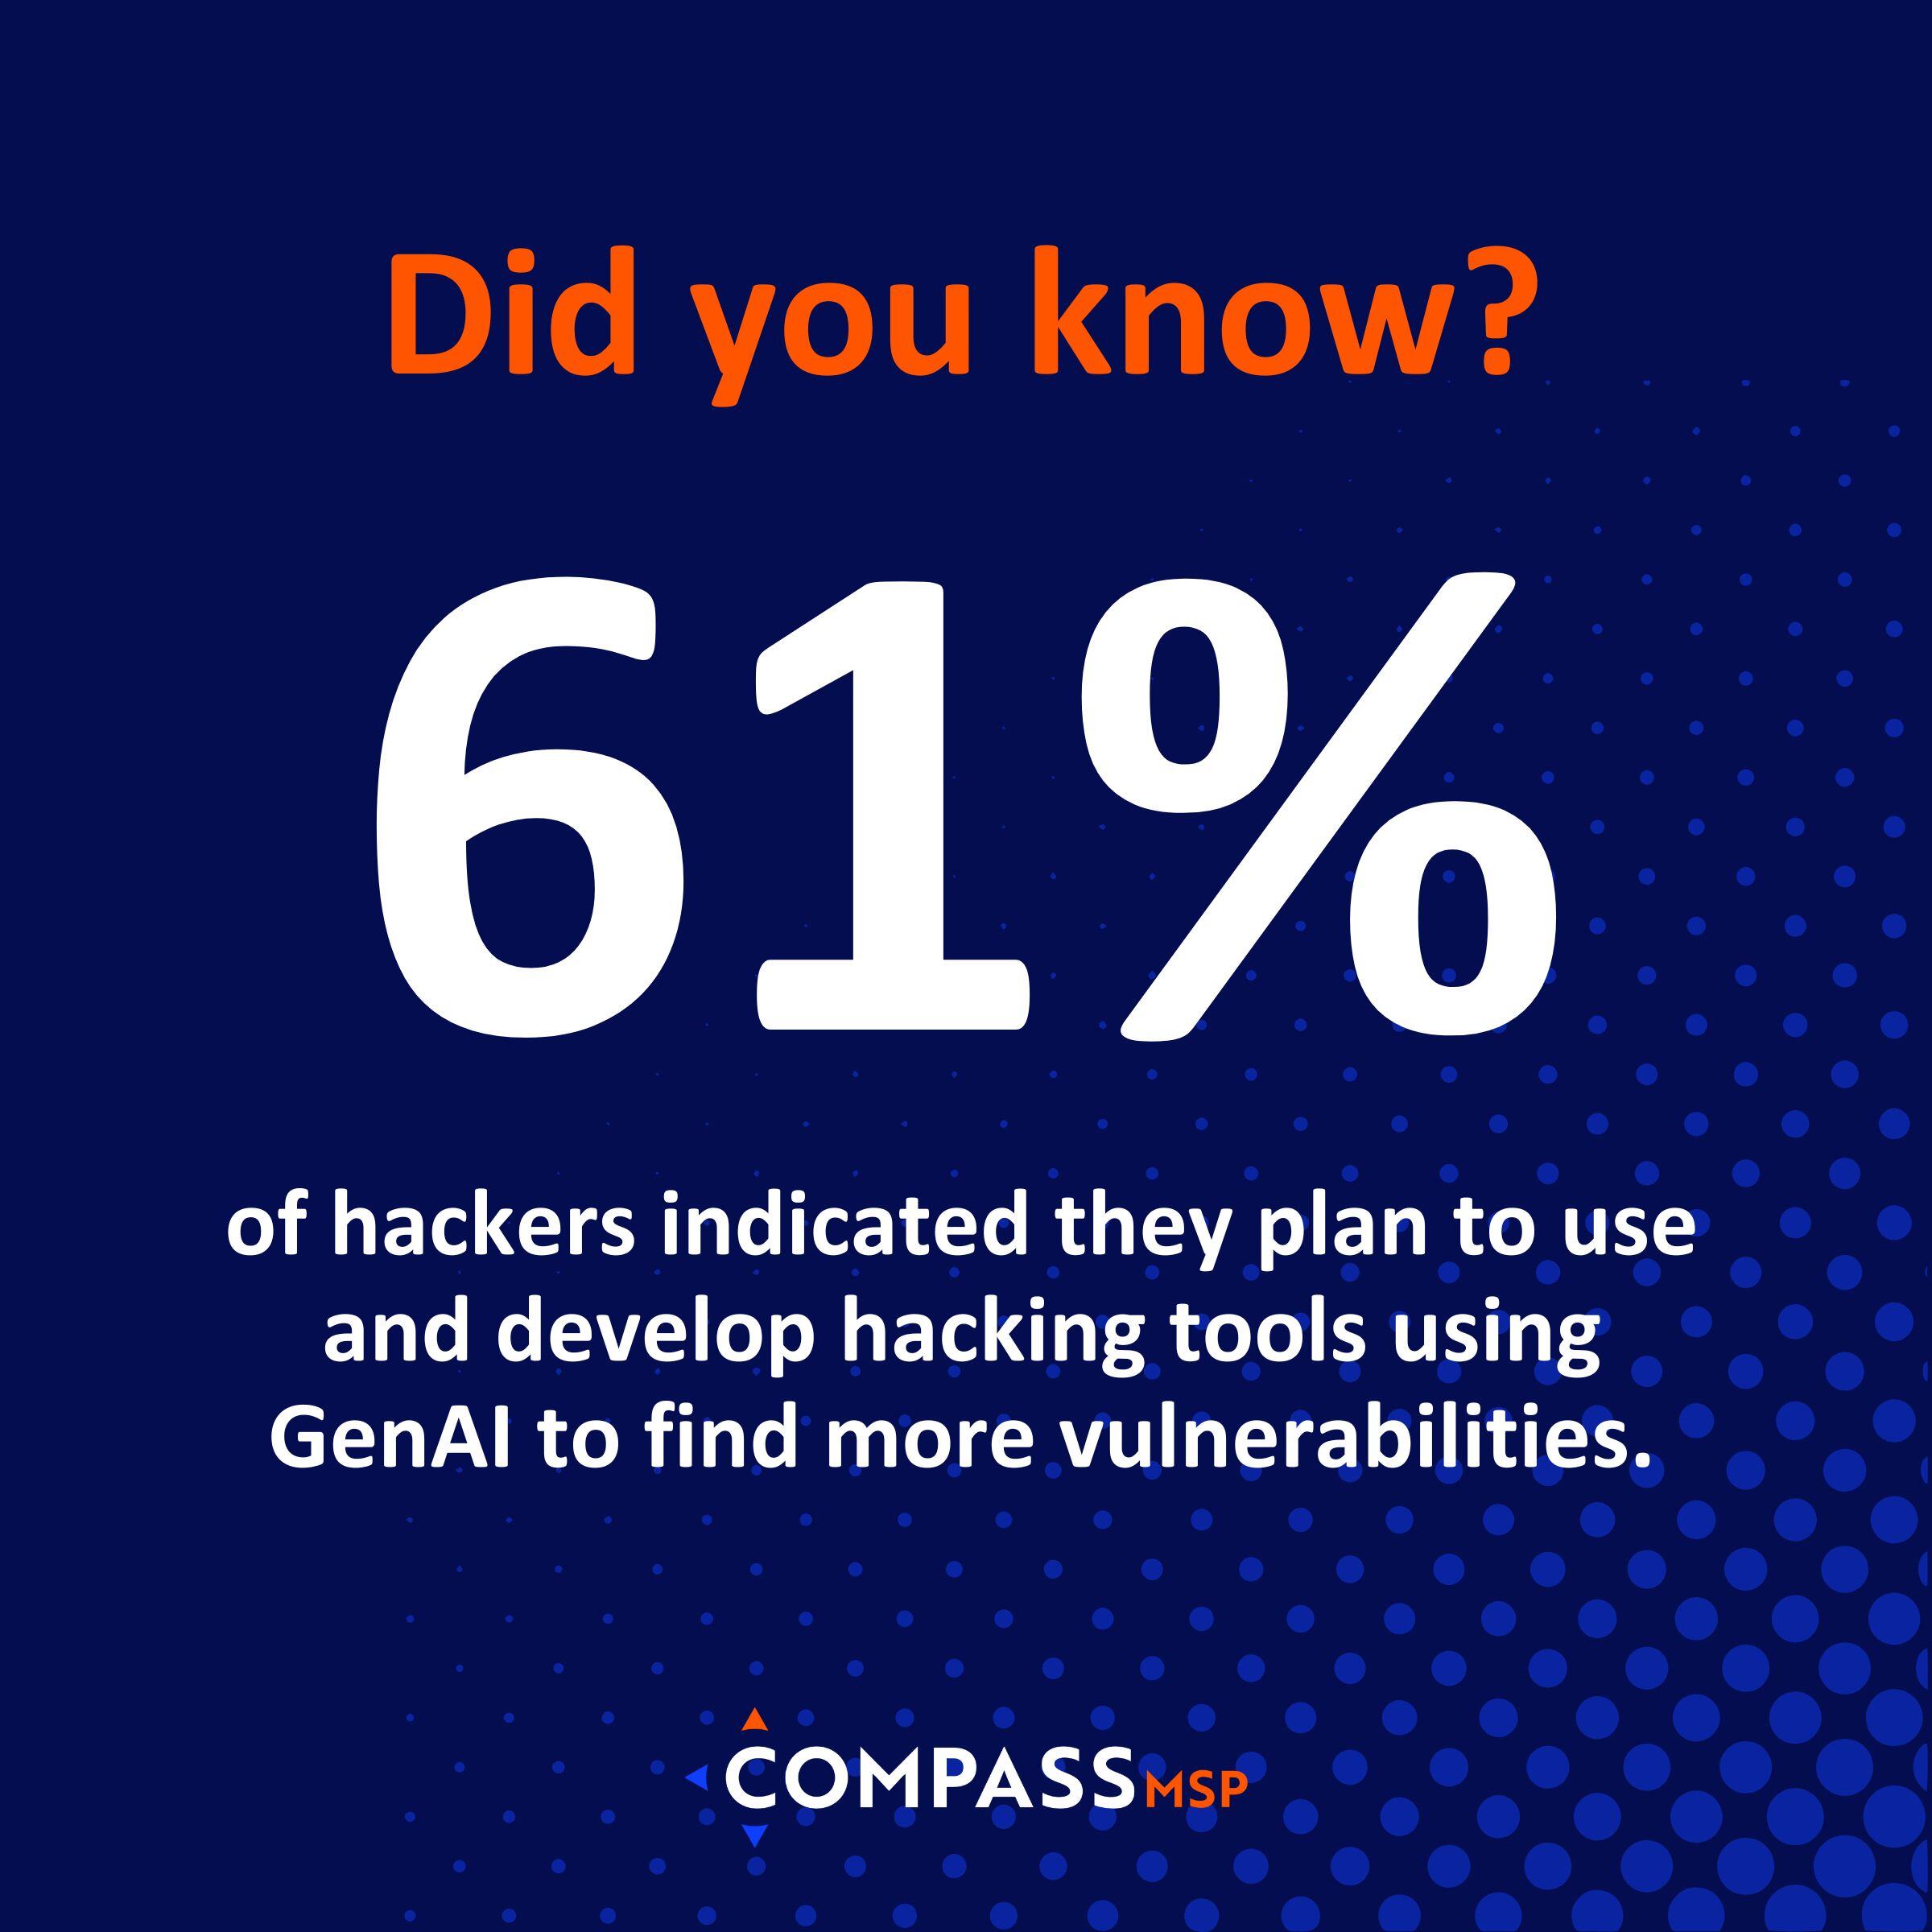 61% of hackers plan to use GenAI